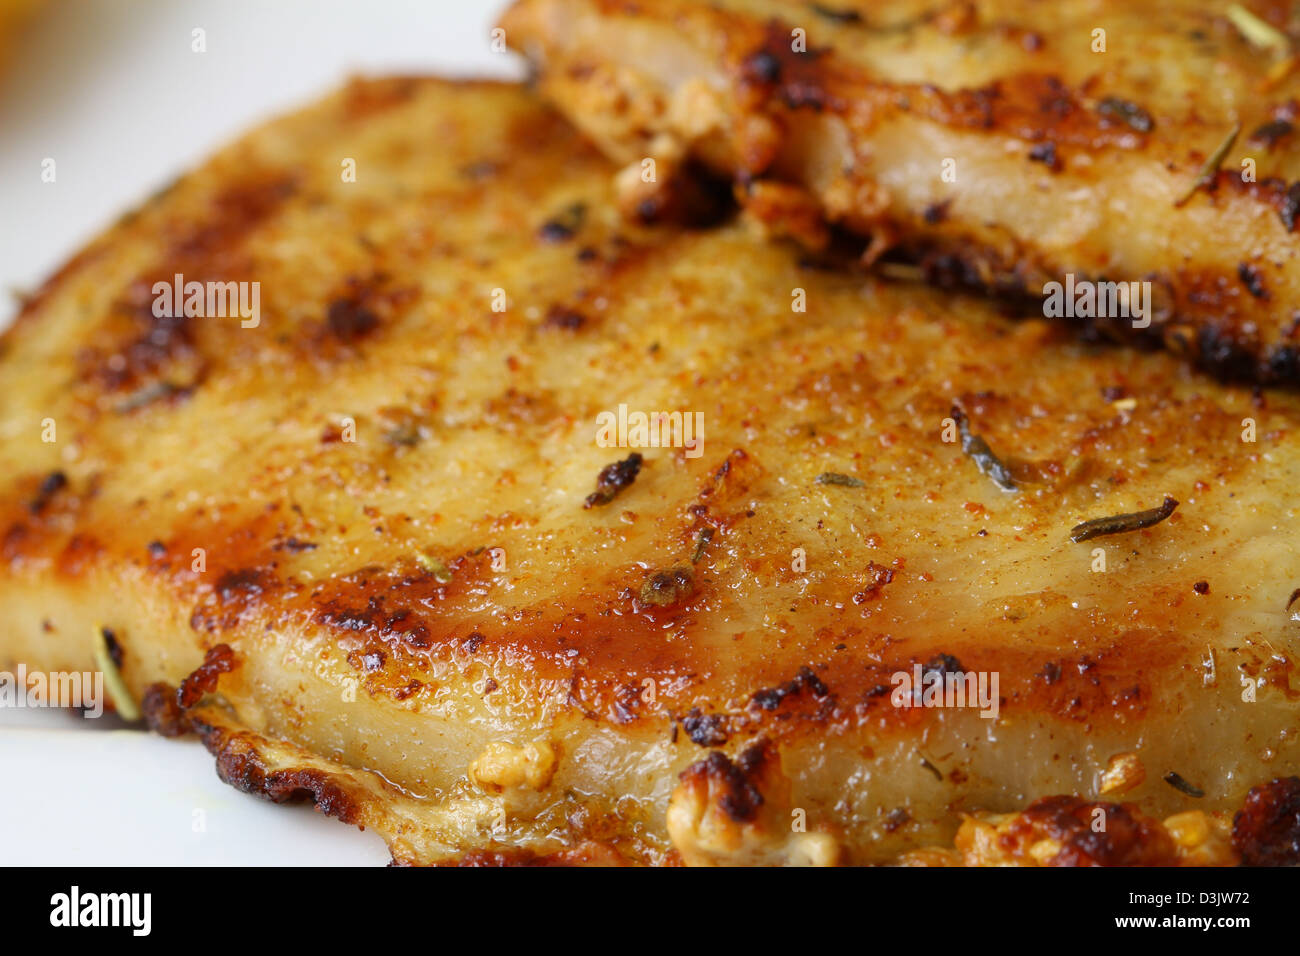 Glazed pork chop, close up Stock Photo